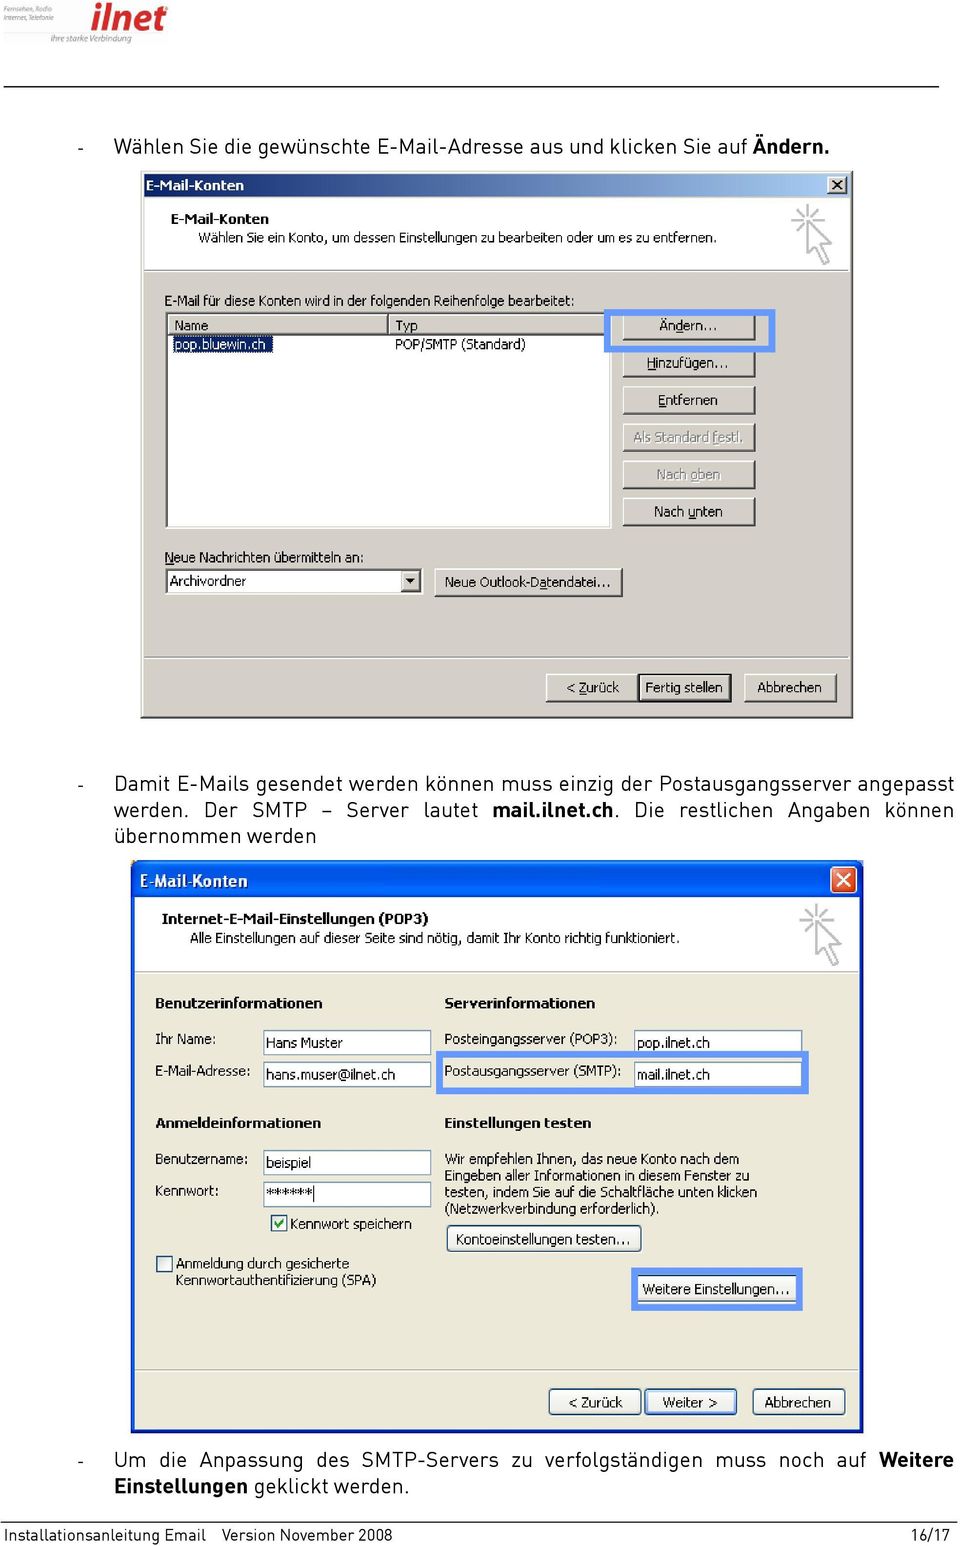 Der SMTP Server lautet mail.ilnet.ch.